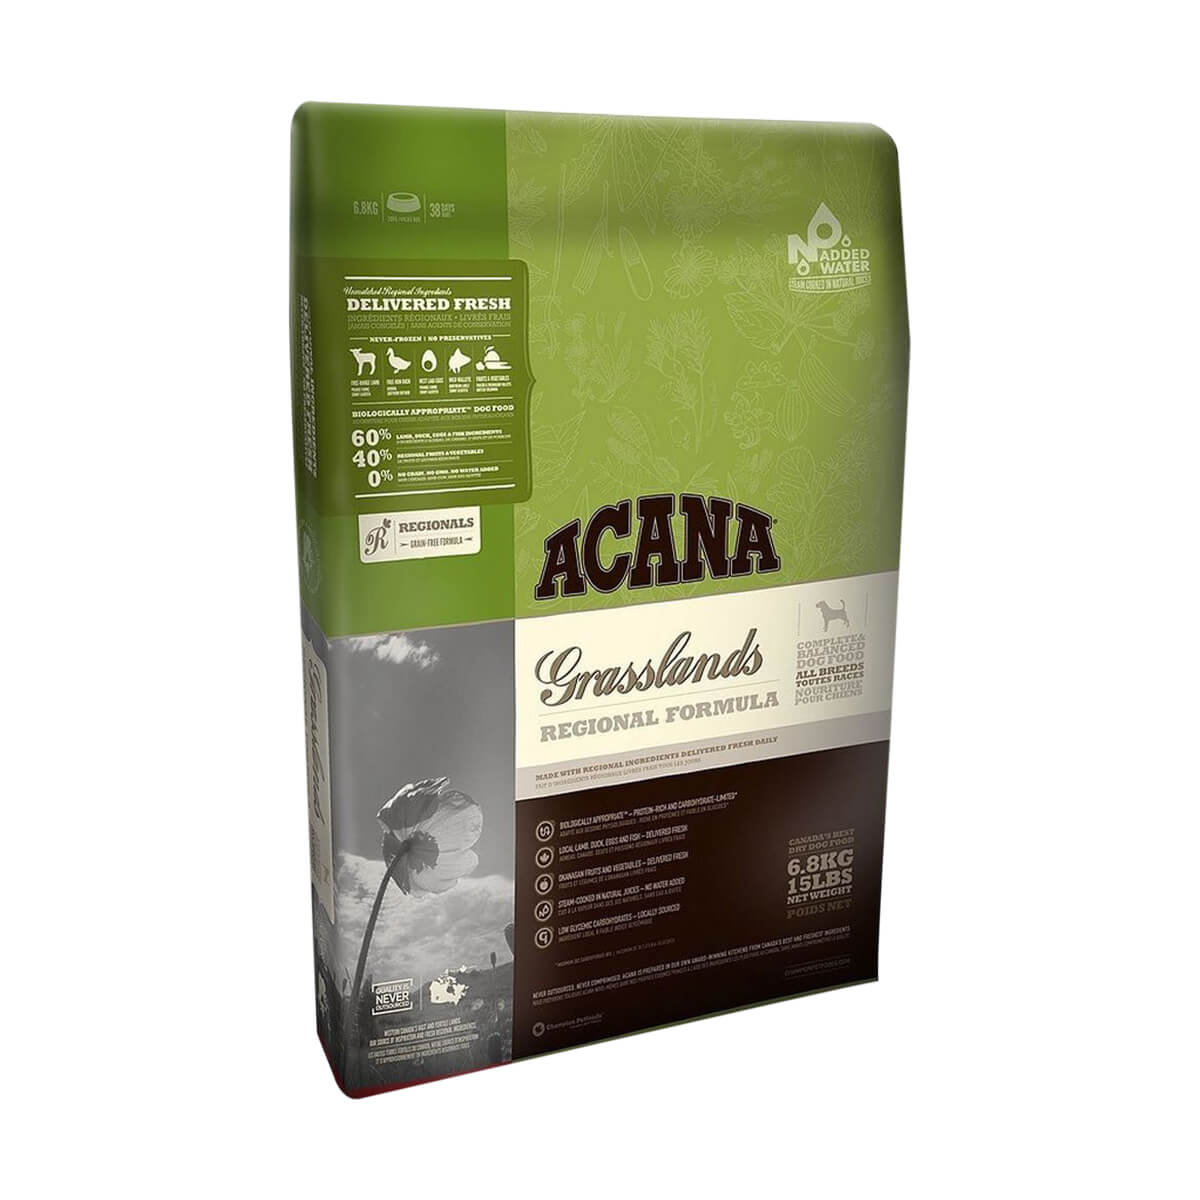 Acana Grasslands Dog Food - 11.4 kg